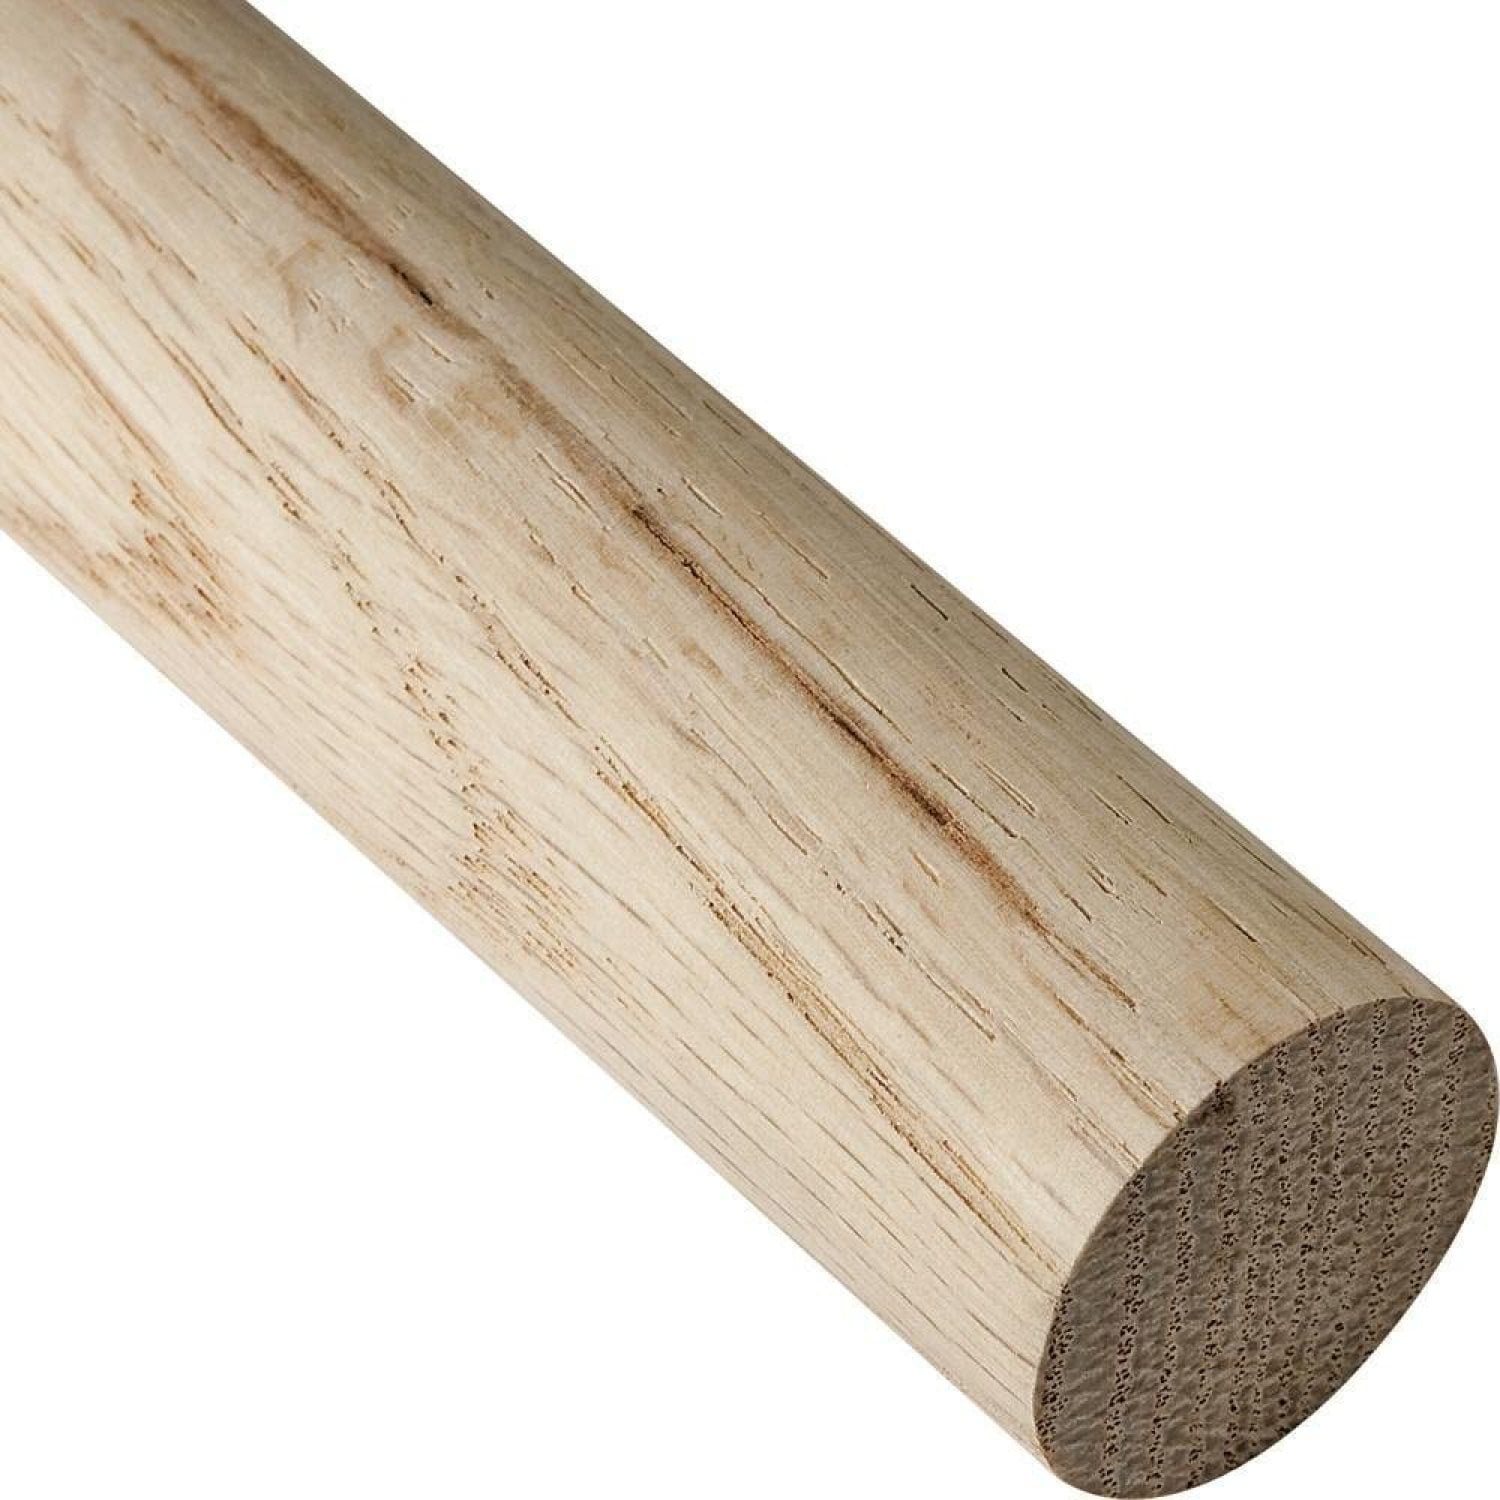 Ashata 100pcs 80mm Round Wooden Sticks For DIY Wood Crafts Home Garden  Decoration, Craft Sticks, Wood Dowels